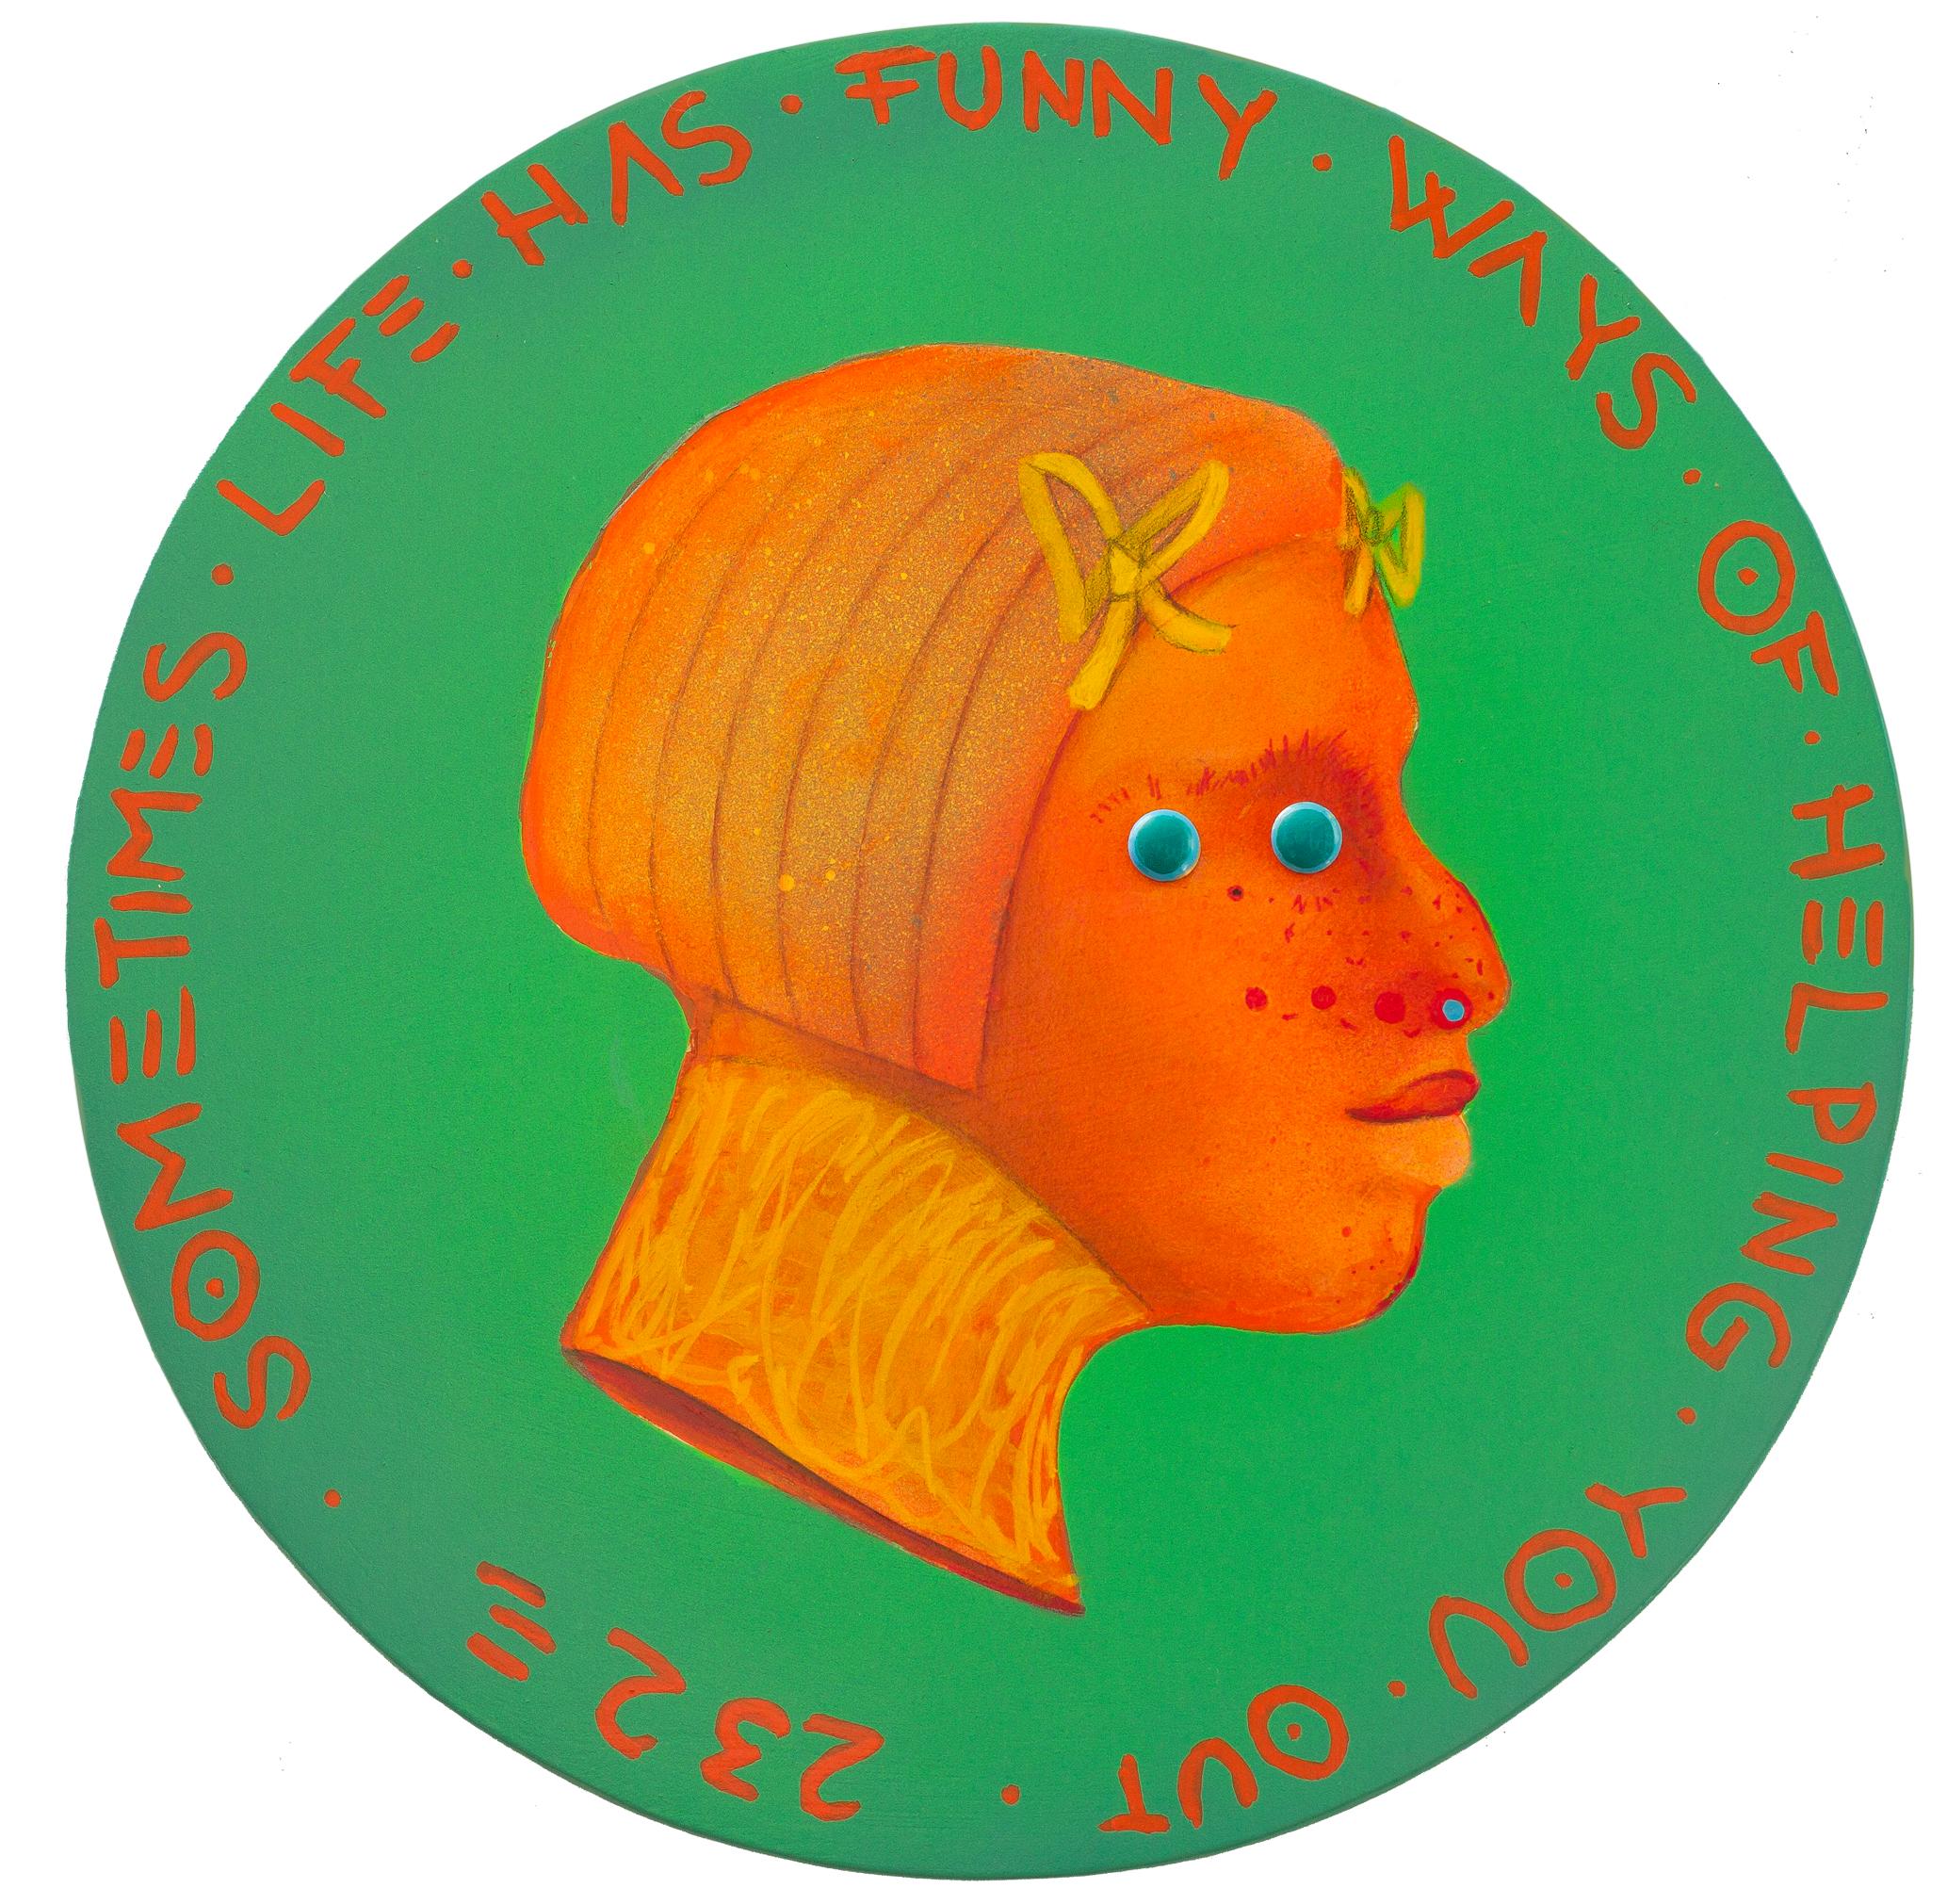 Contemporary Pop Surrealist Colorful Face Coin. Naive   "Currency #215" - Mixed Media Art by Natasha Lelenco